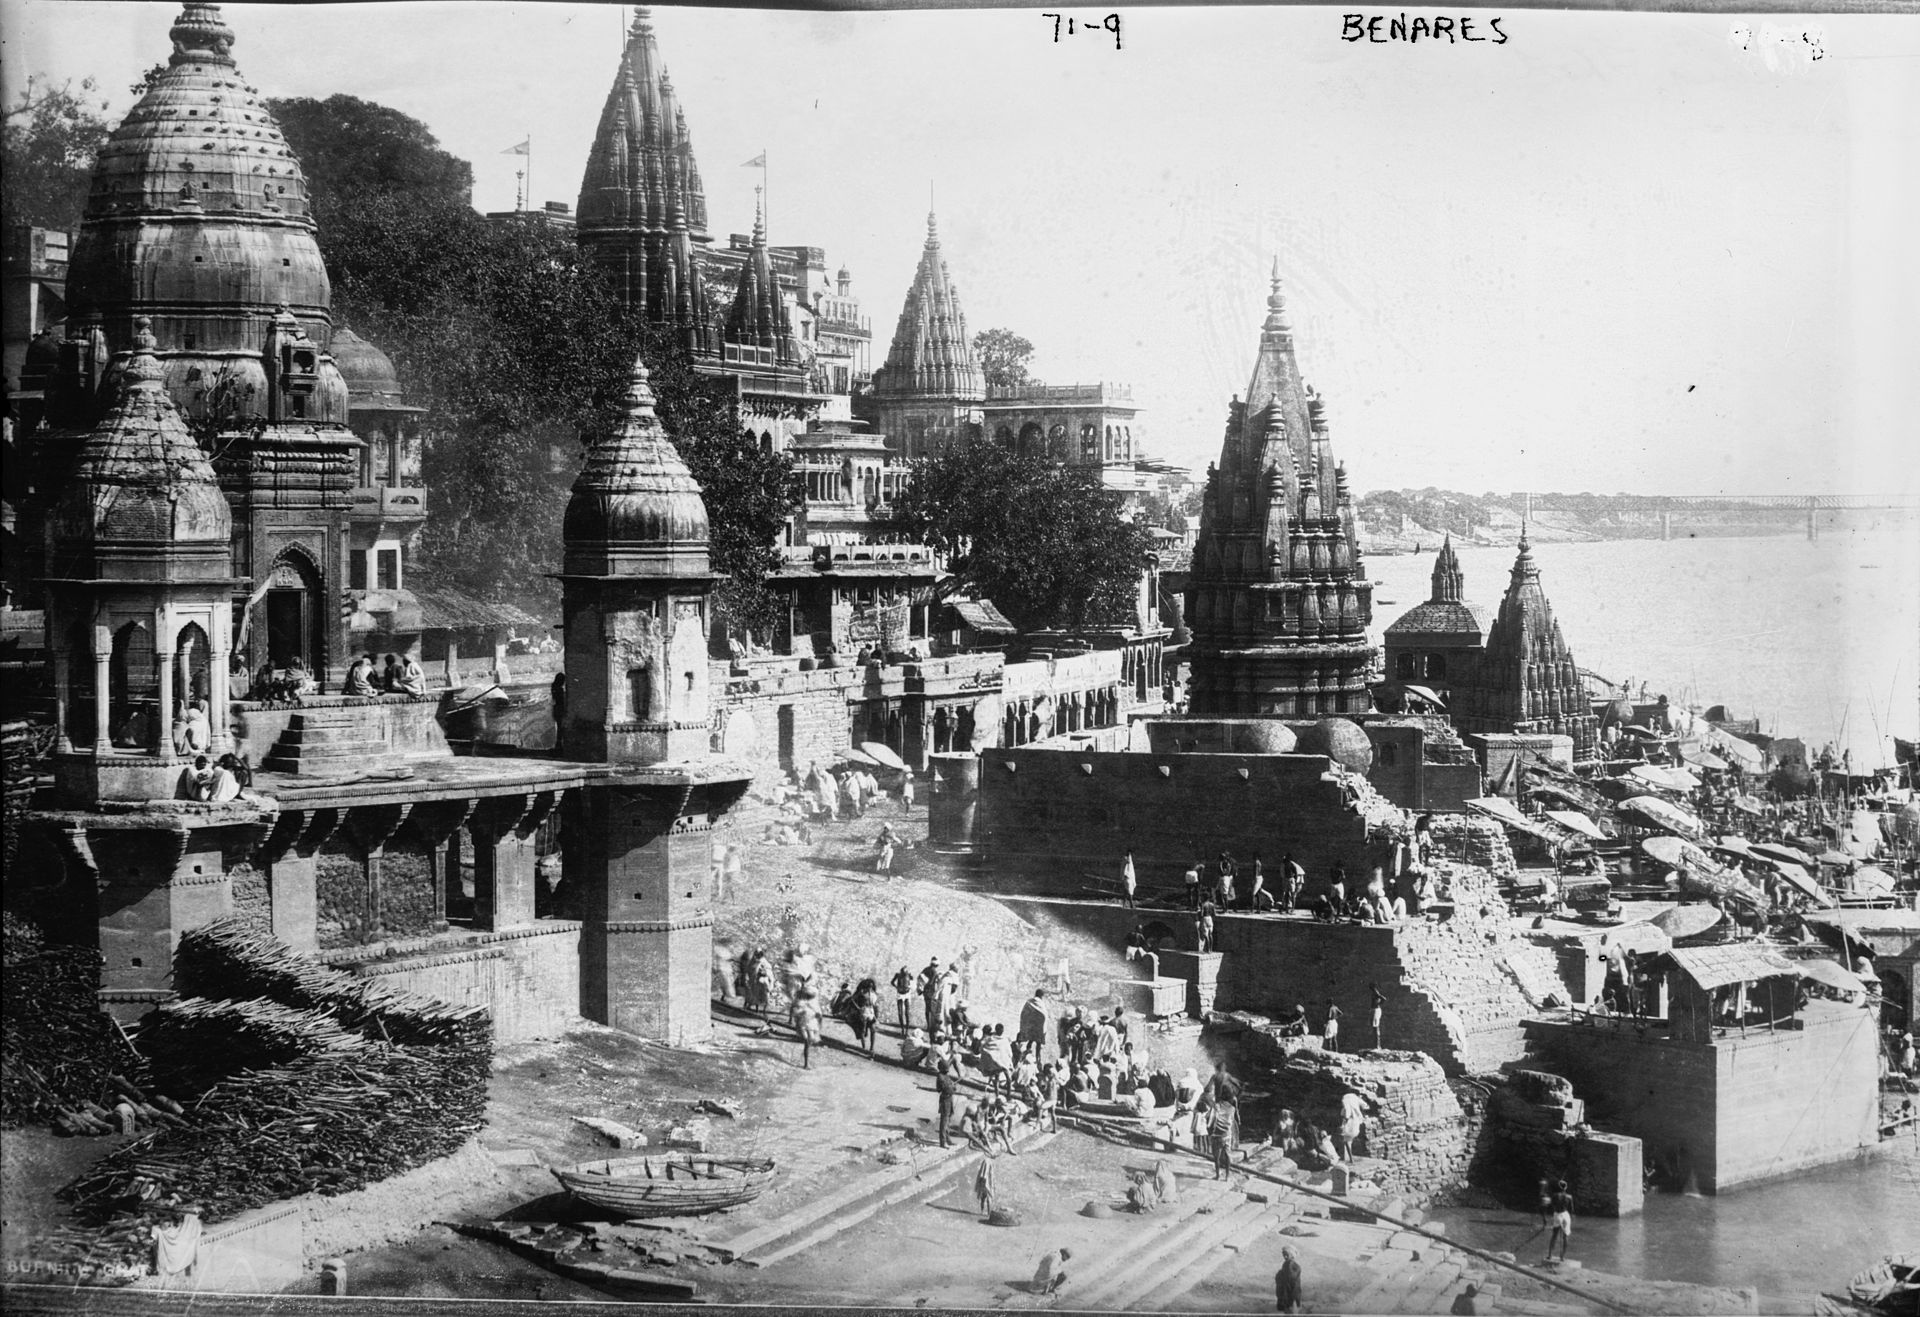 Benares_(Varanasi,_India)_-_1922.jpg